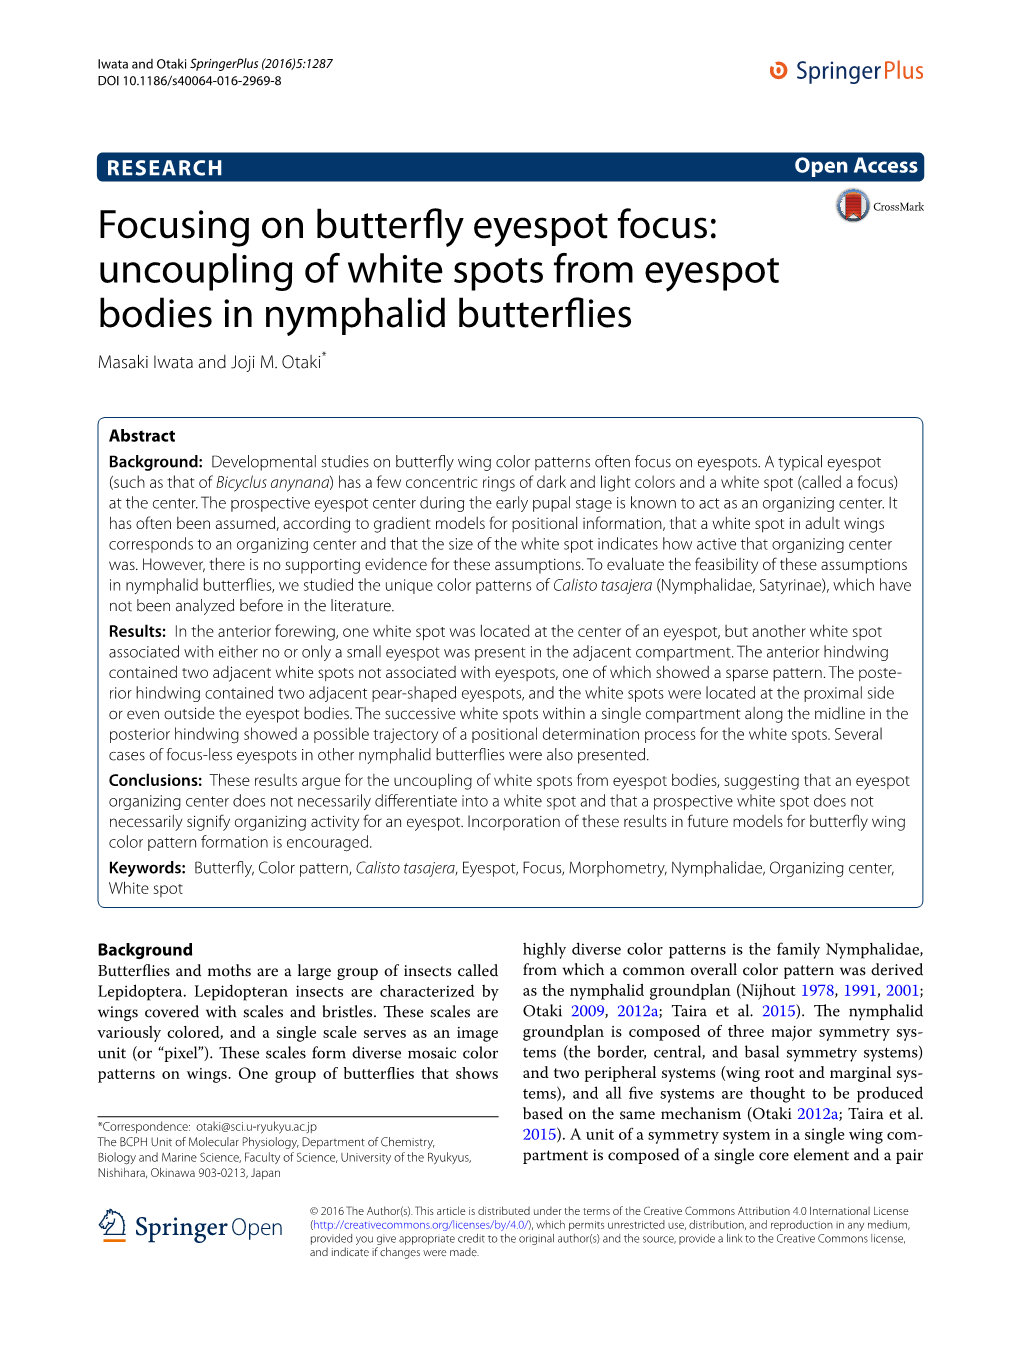 Focusing on Butterfly Eyespot Focus: Uncoupling of White Spots from Eyespot Bodies in Nymphalid Butterflies Masaki Iwata and Joji M